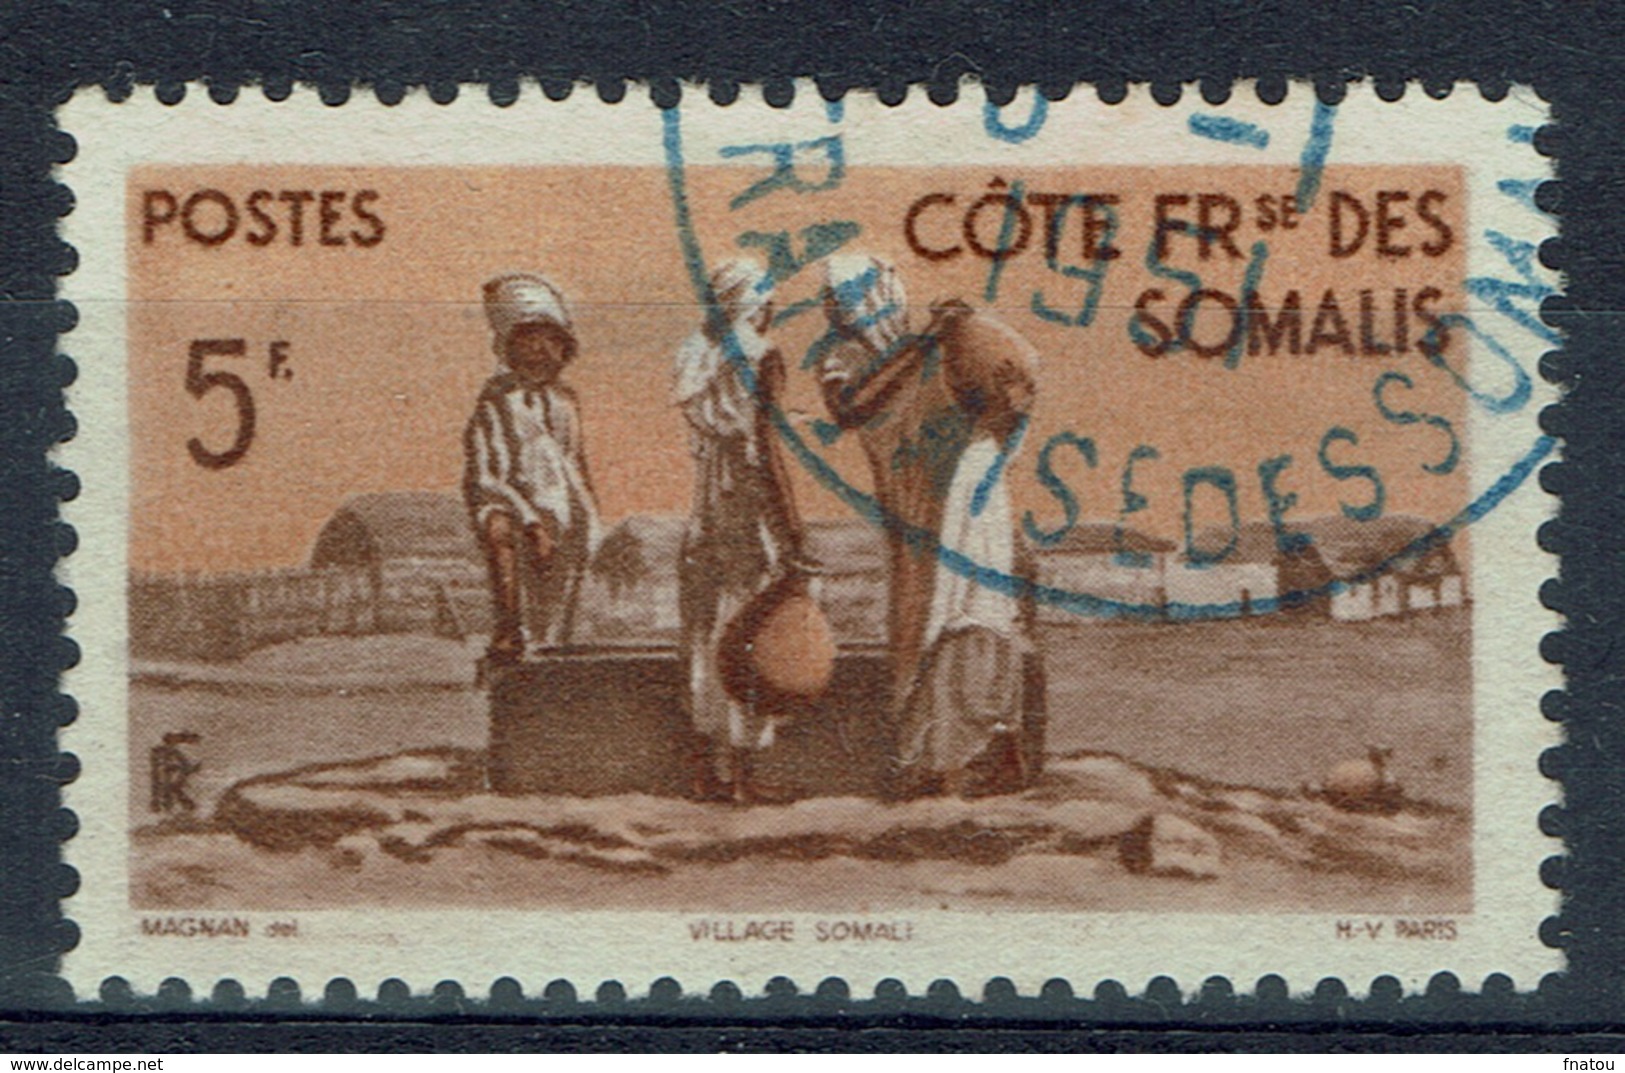 French Somali Coast, 5f., Village And Well, 1947, VFU - Oblitérés